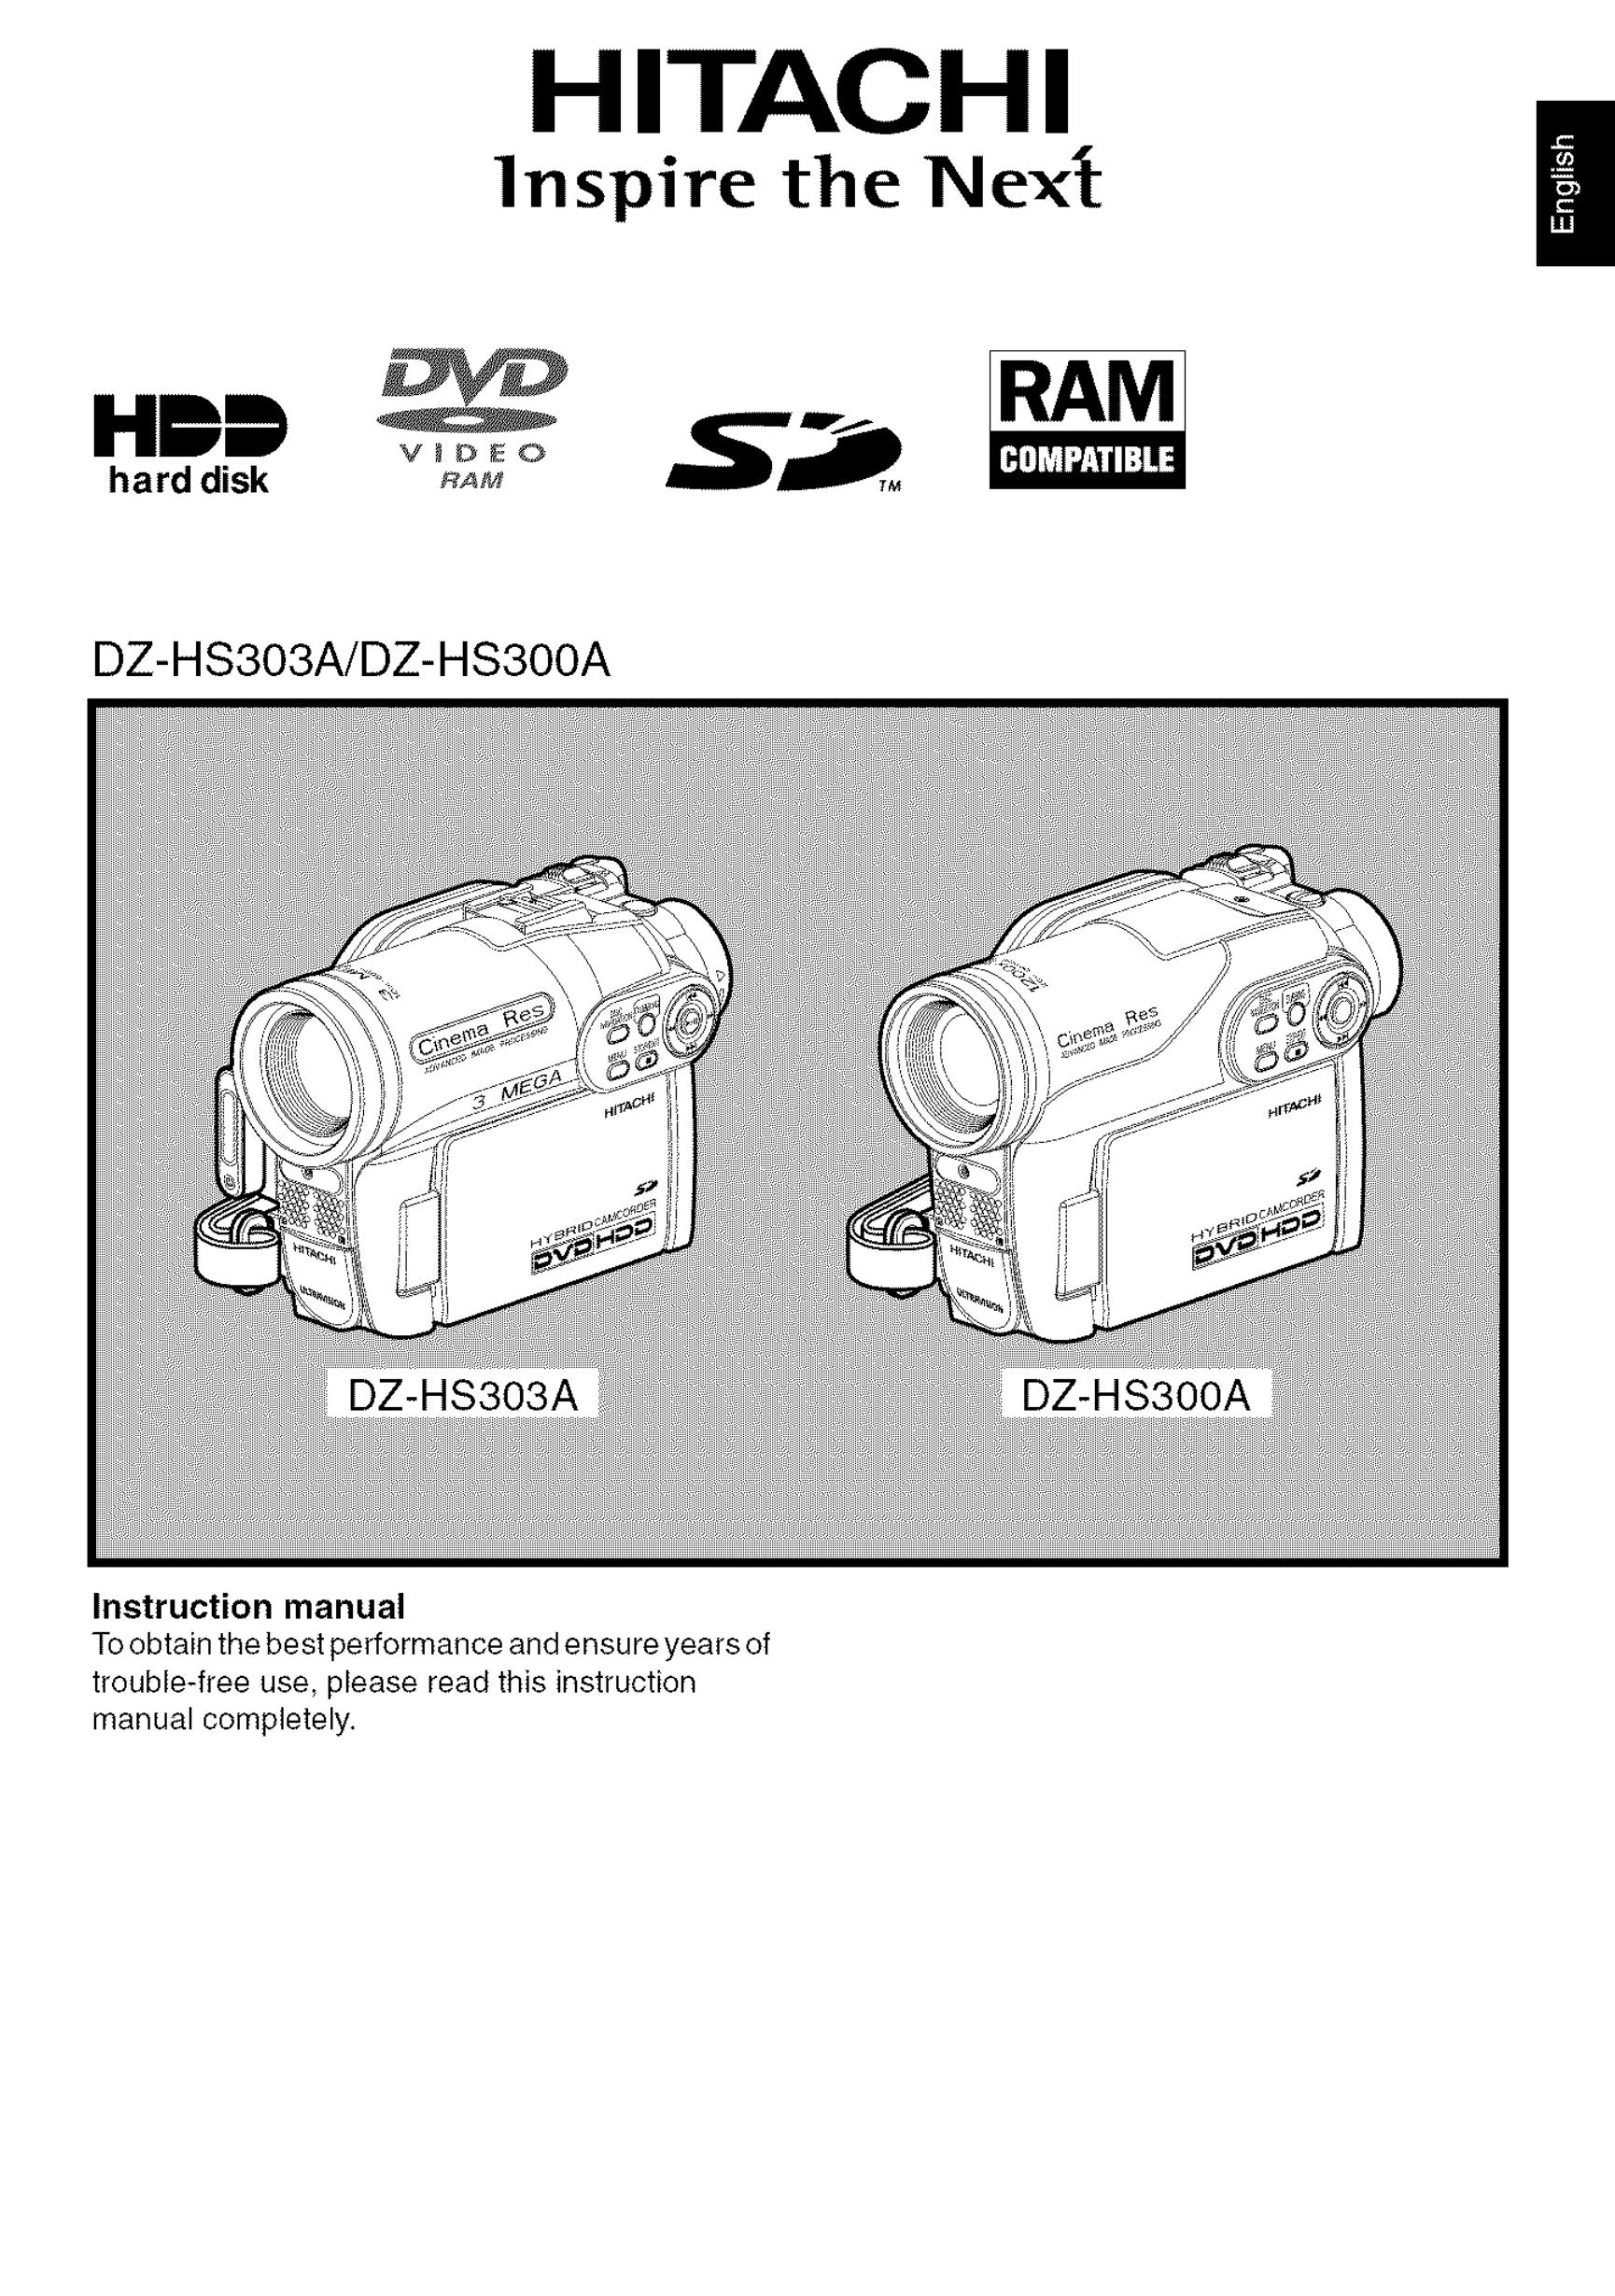 Hitachi DZ-HS3OOA Camcorder User Manual